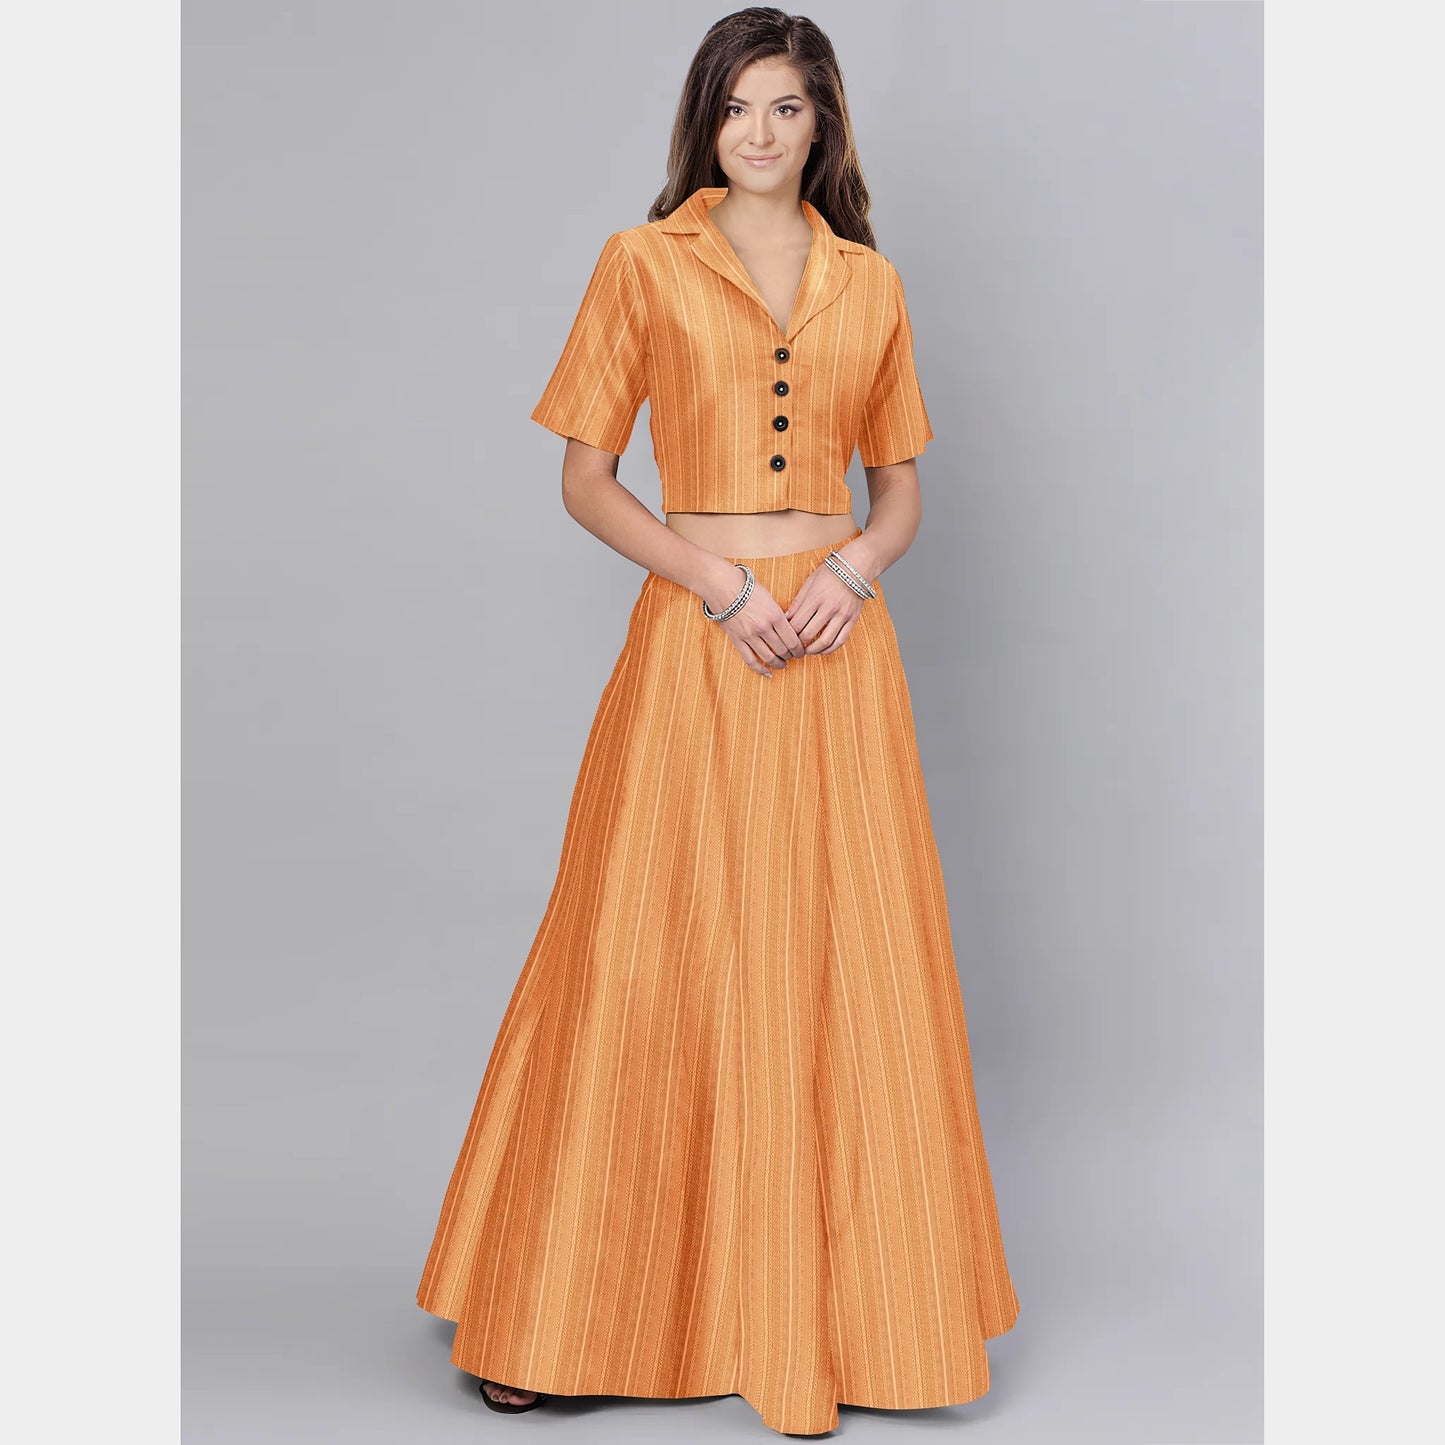 Orange Solid Jacquard Cotton Fabric, Plain Weave 48 Inches, TU-2007